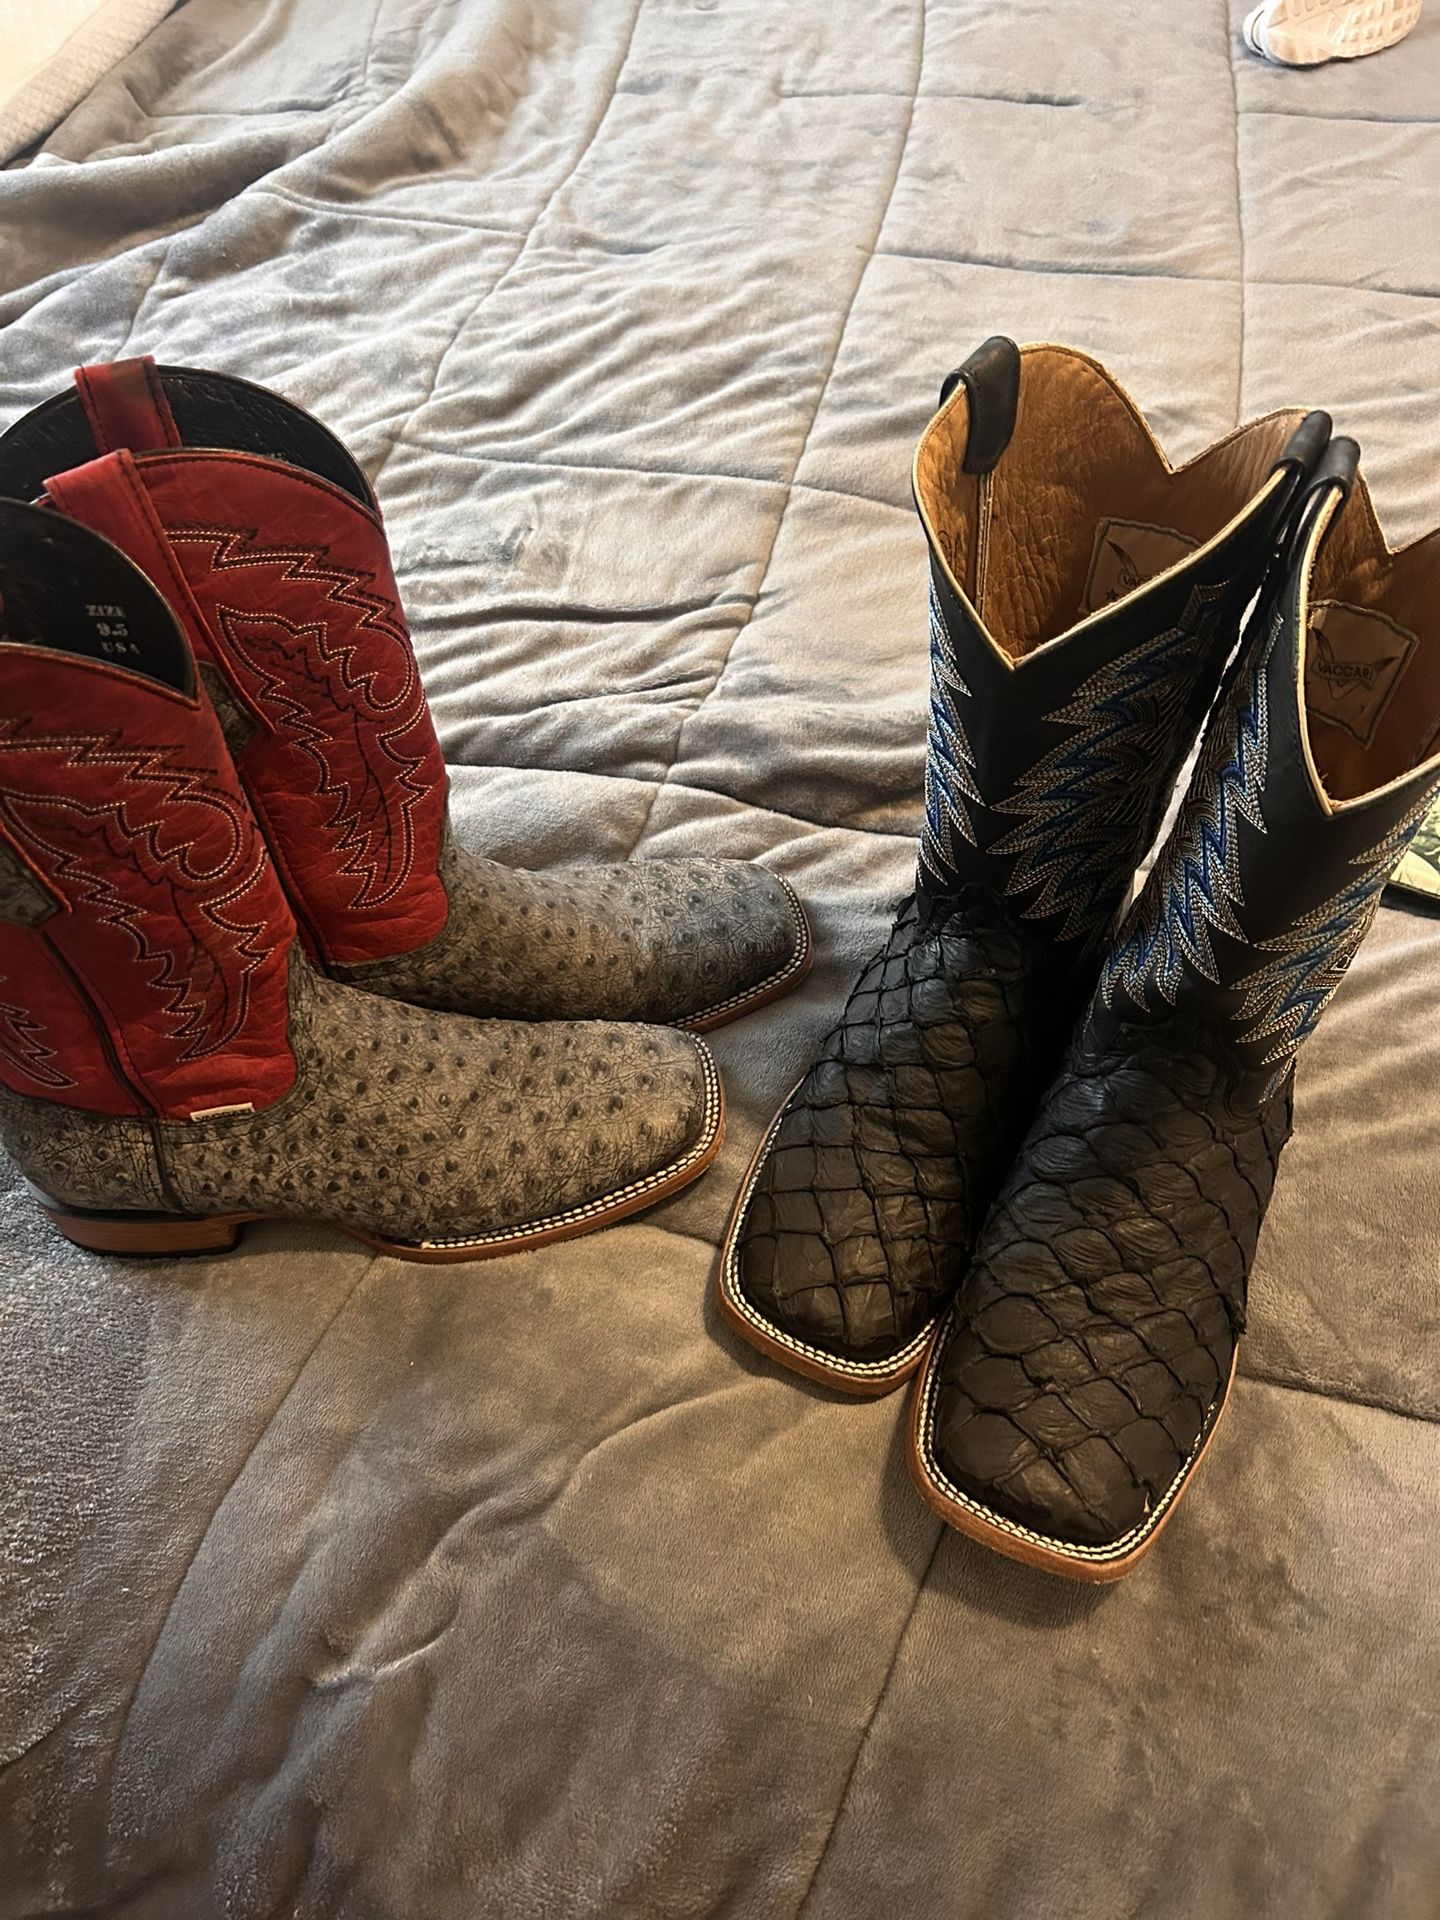 Gator/Ostrich Boots